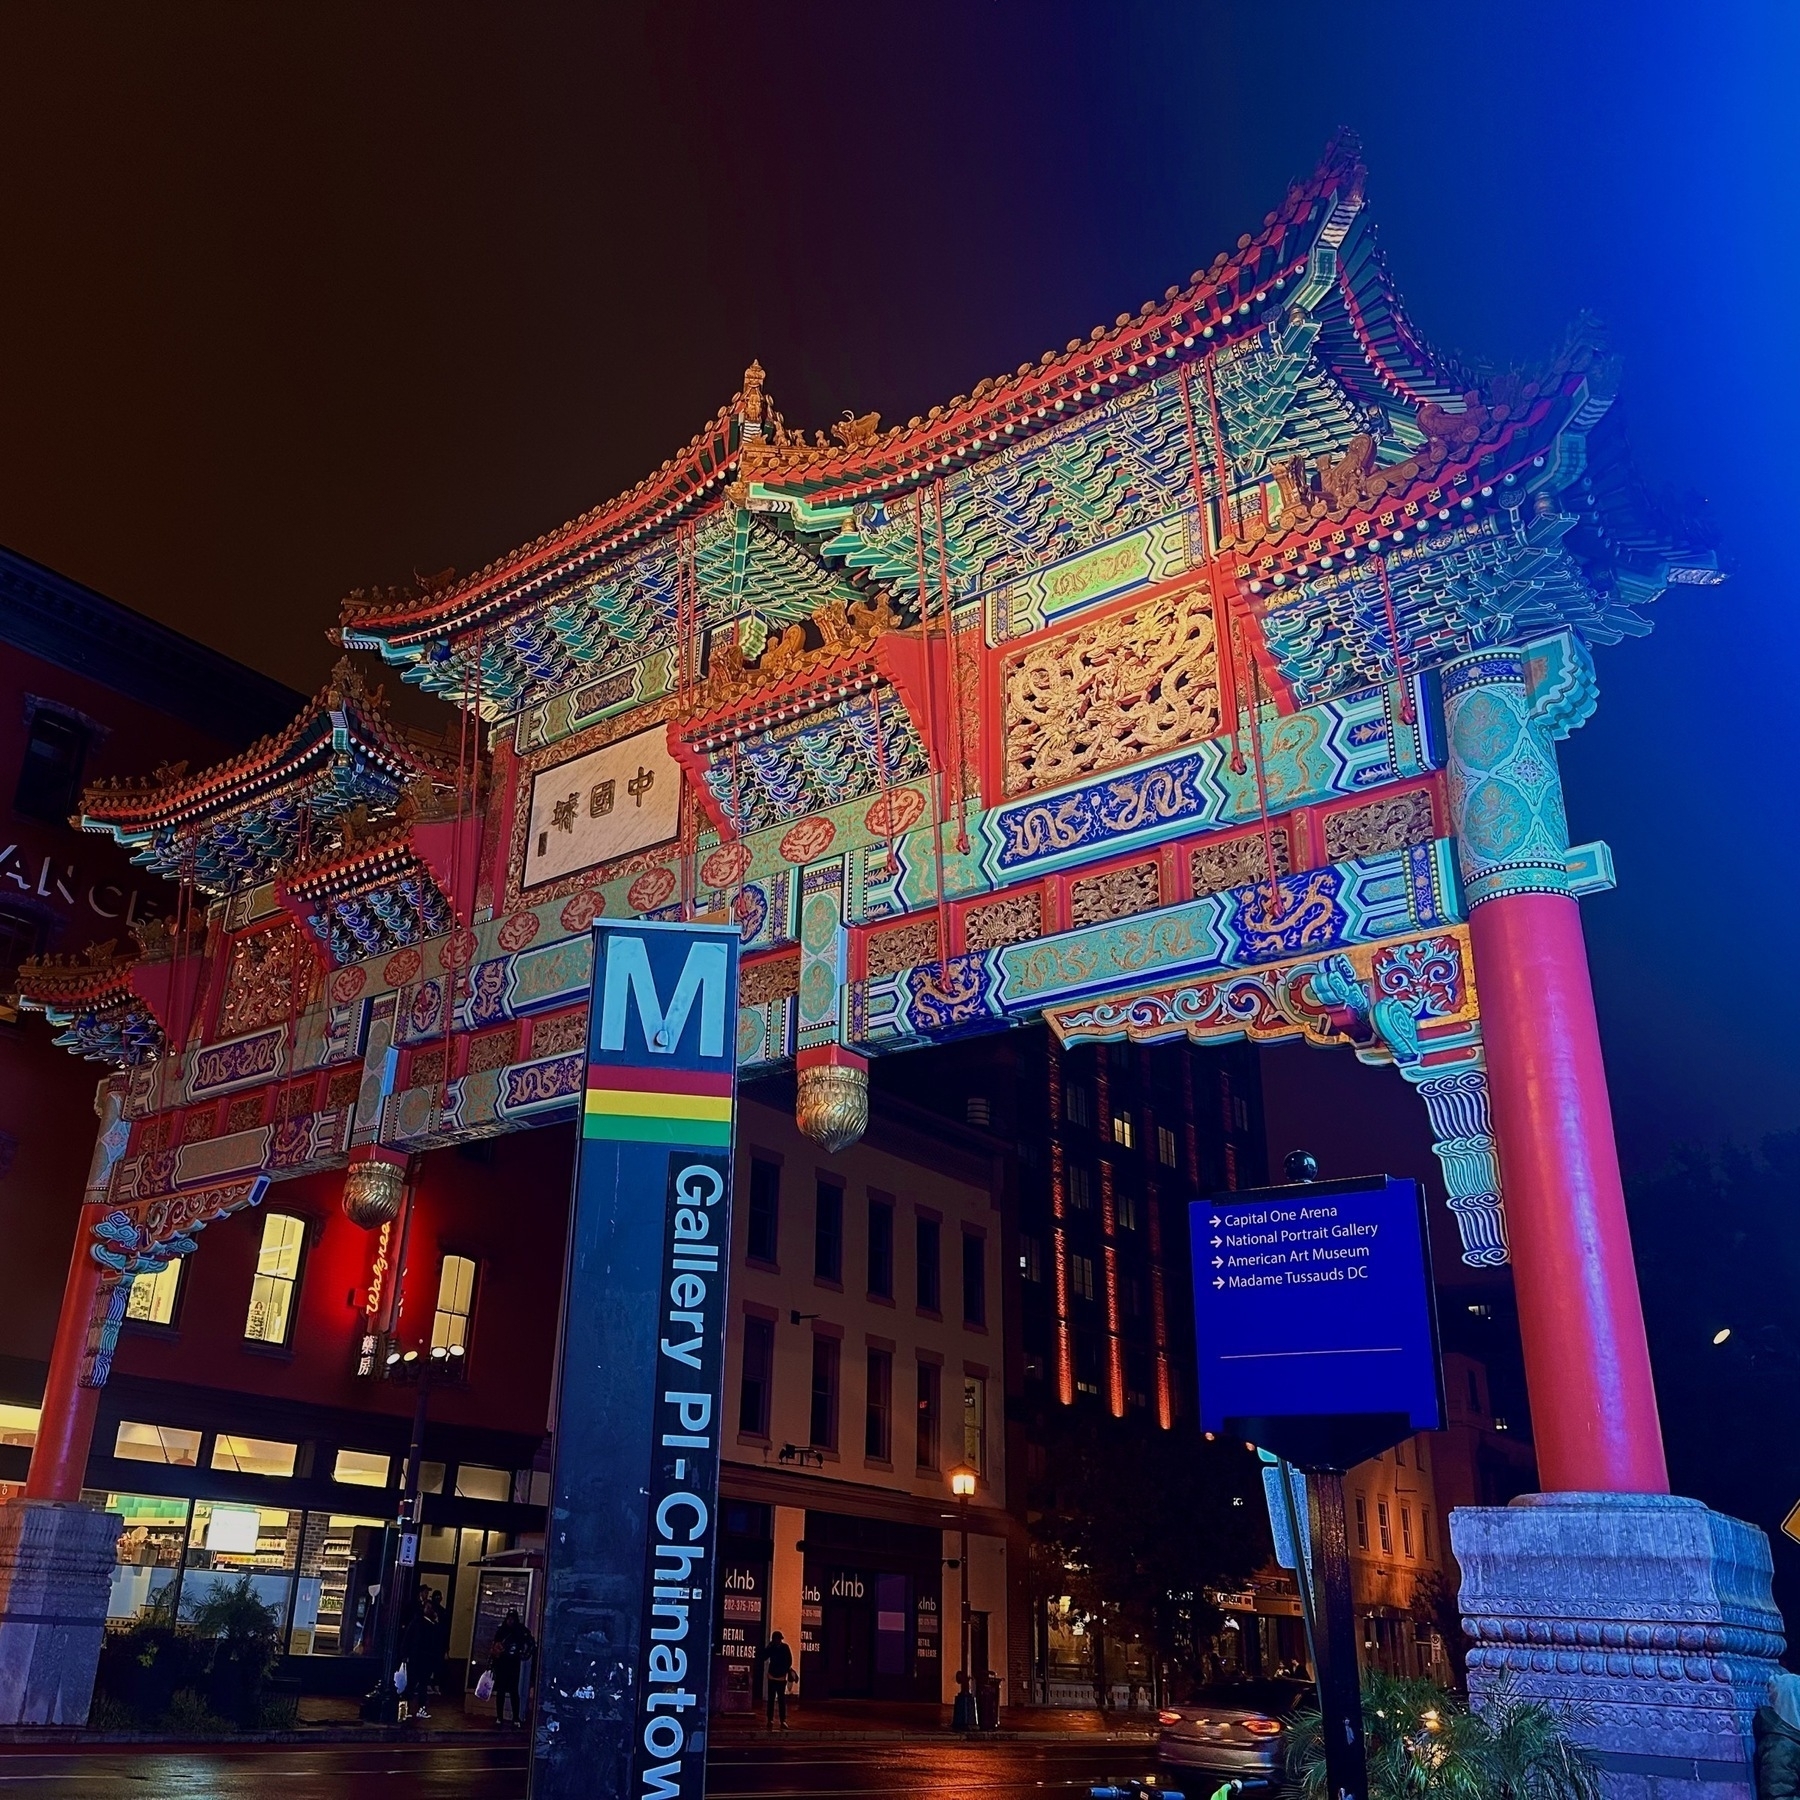 Chinatown DC gates at night with blue light illuminating them.